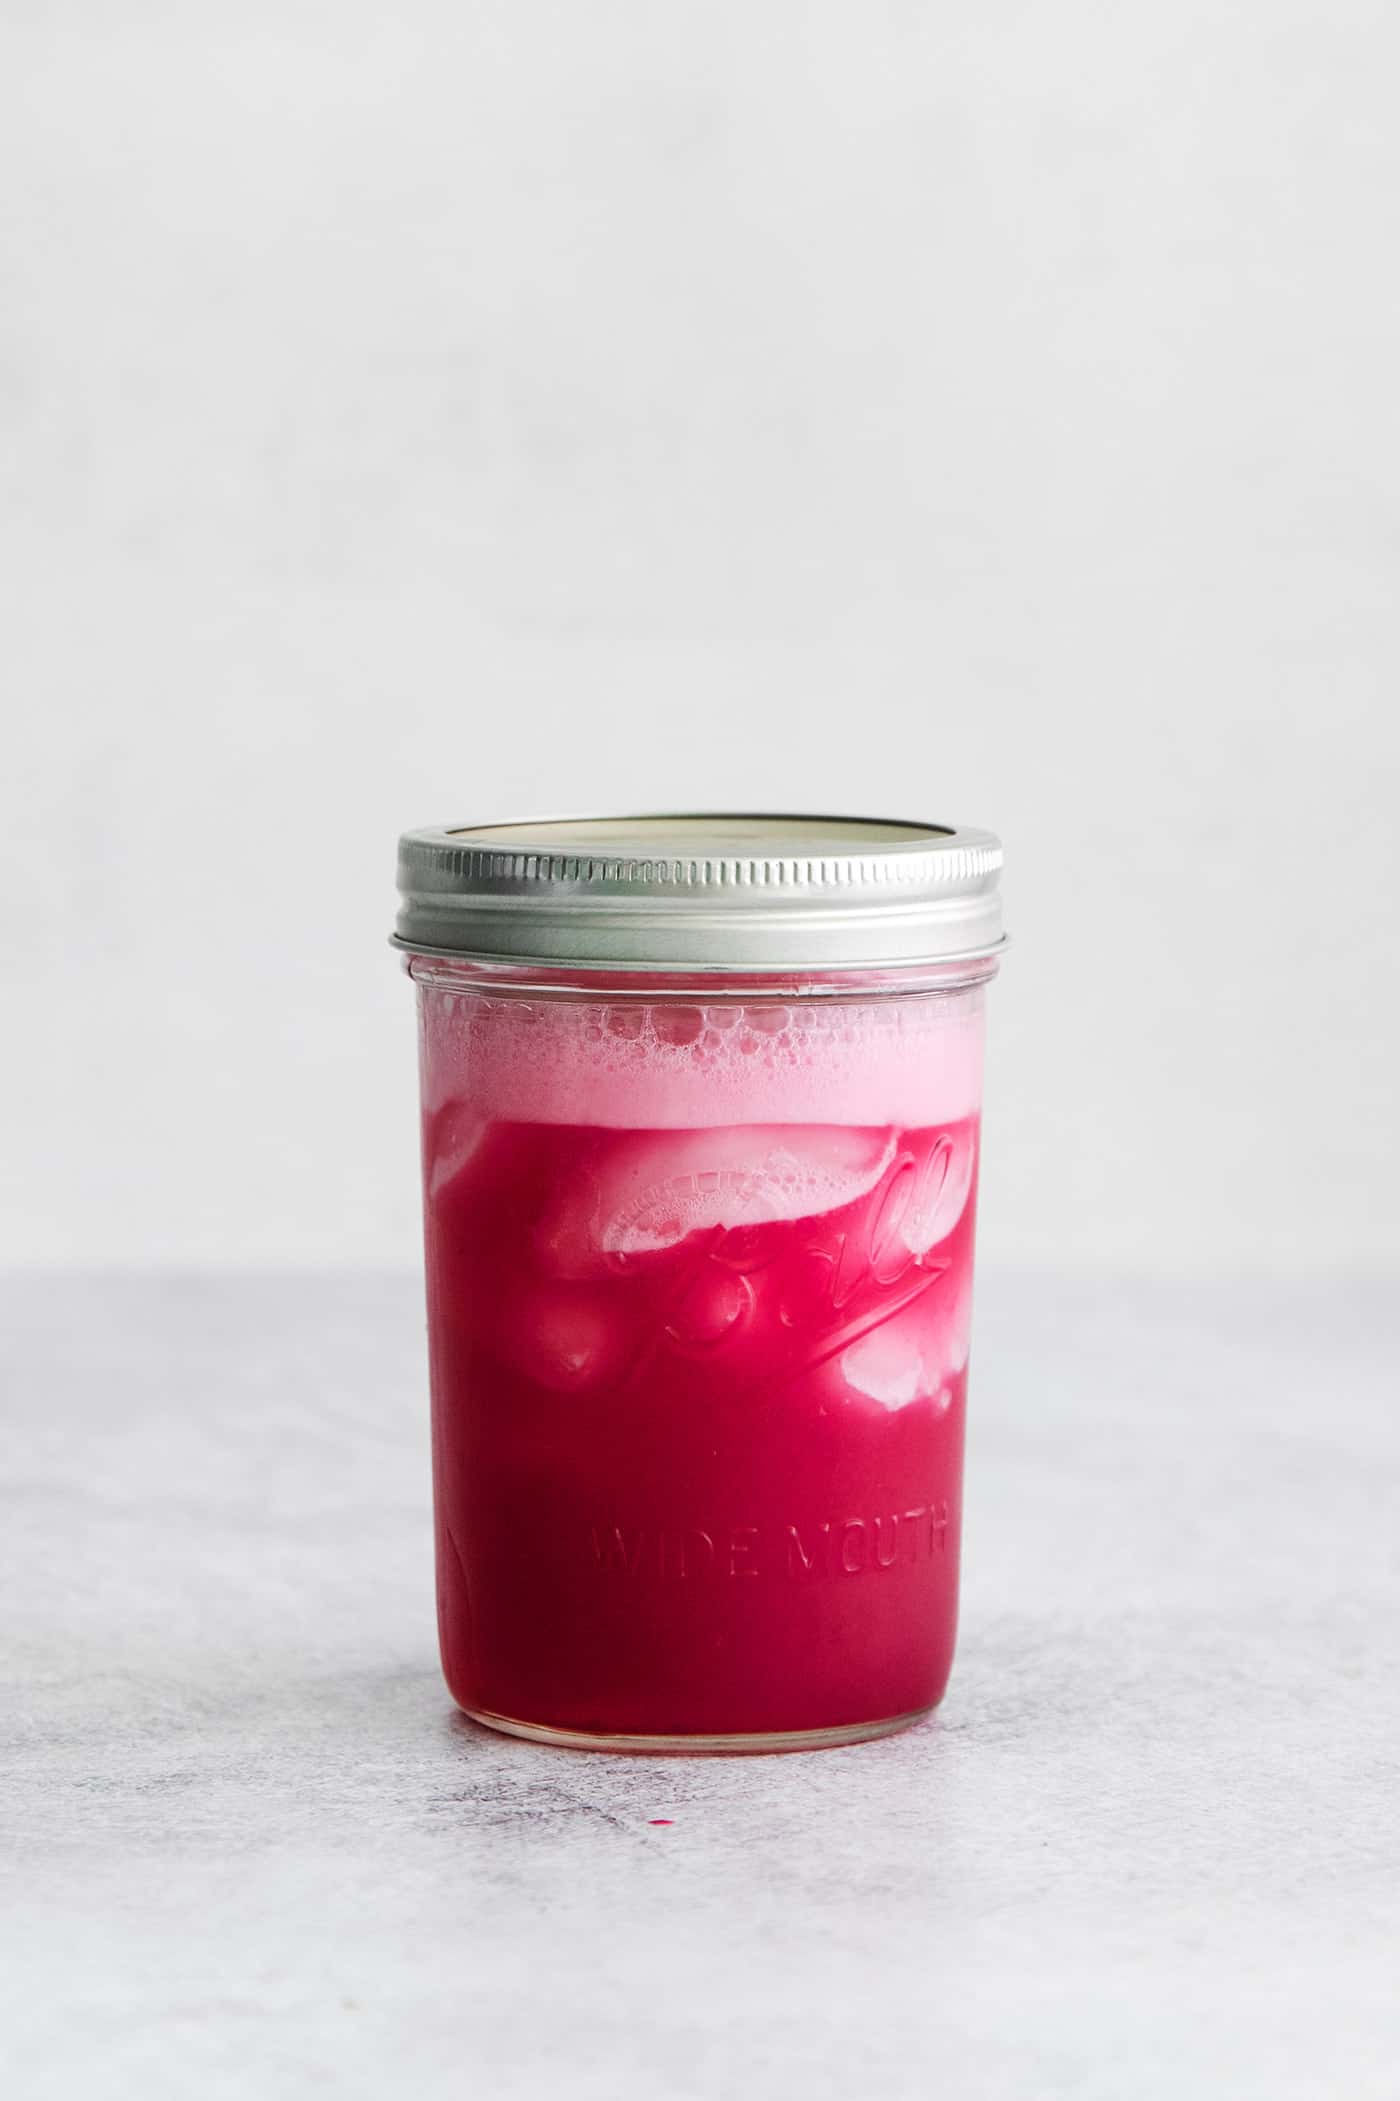 Blueberry margarita ingredients in a mason jar